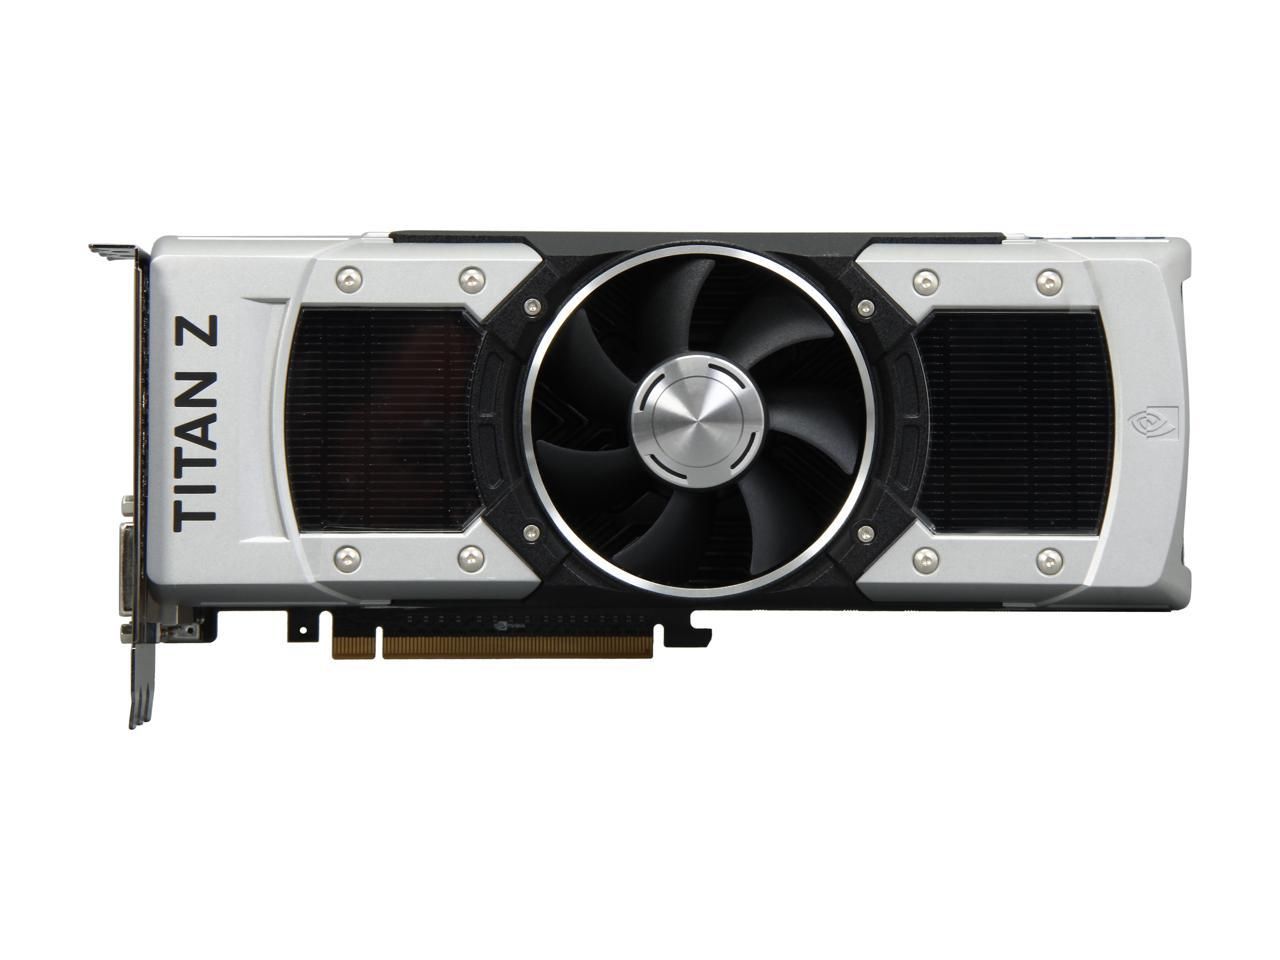 Nvidia Titan Z graphics cards